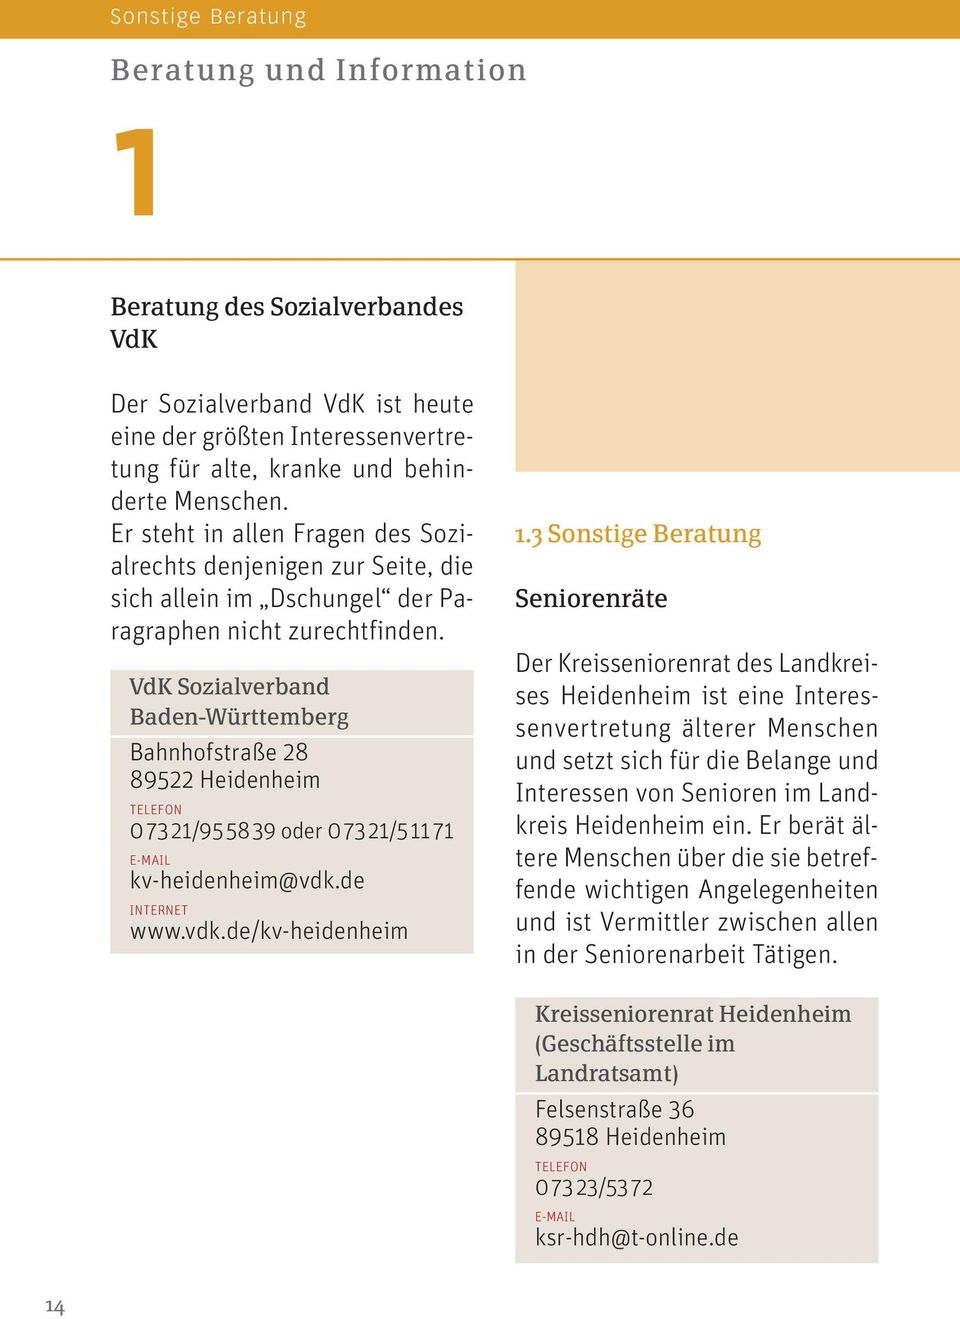 VdK Sozialverband Baden-Württemberg Bahnhofstraße 28 89522 Heidenheim 0 73 21/95 58 39 oder 0 73 21/5 11 71 kv-heidenheim@vdk.de www.vdk.de/kv-heidenheim 1.